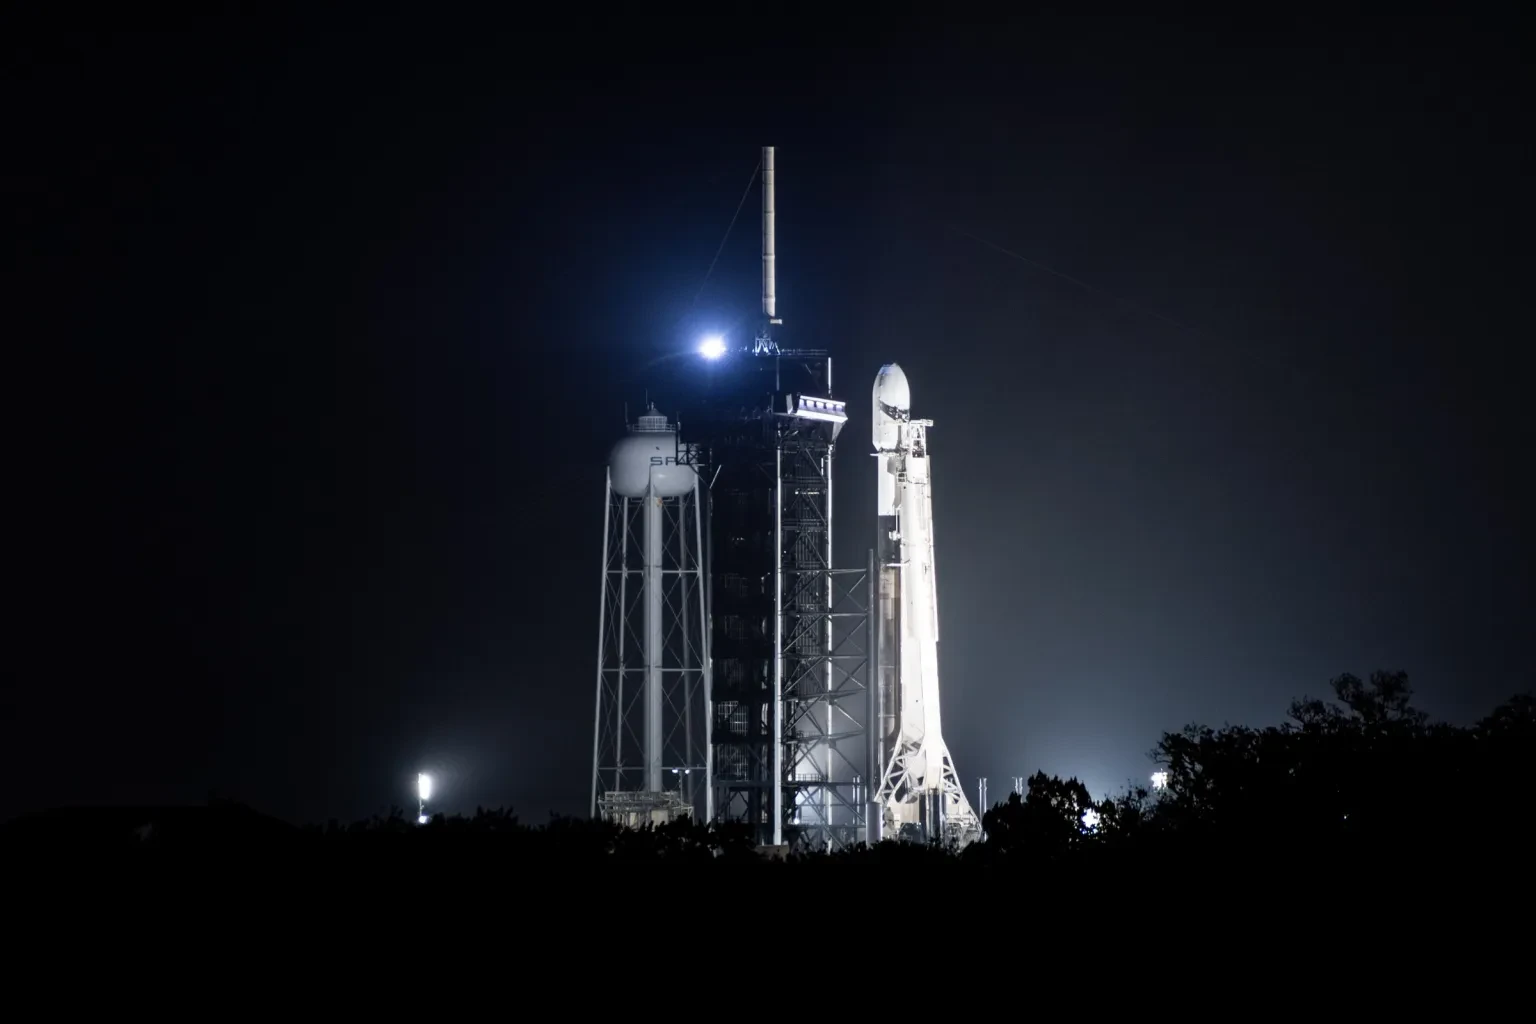 IM-1, Nova-C “Odysseus” | Falcon 9 Block 5